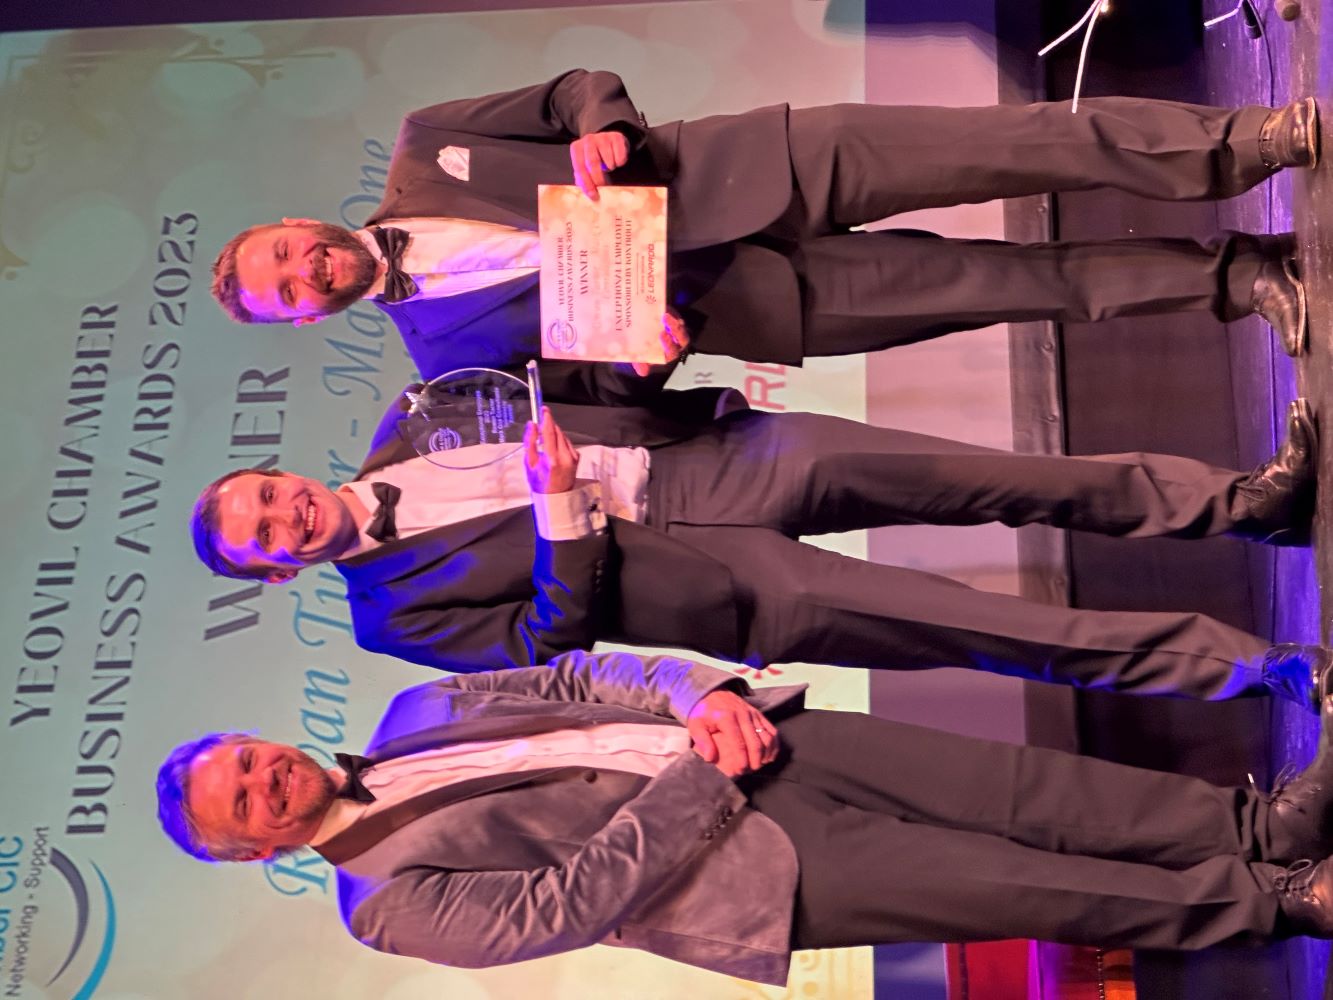  Celebrating Rowan's Outstanding Achievement at Yeovil Business Awards